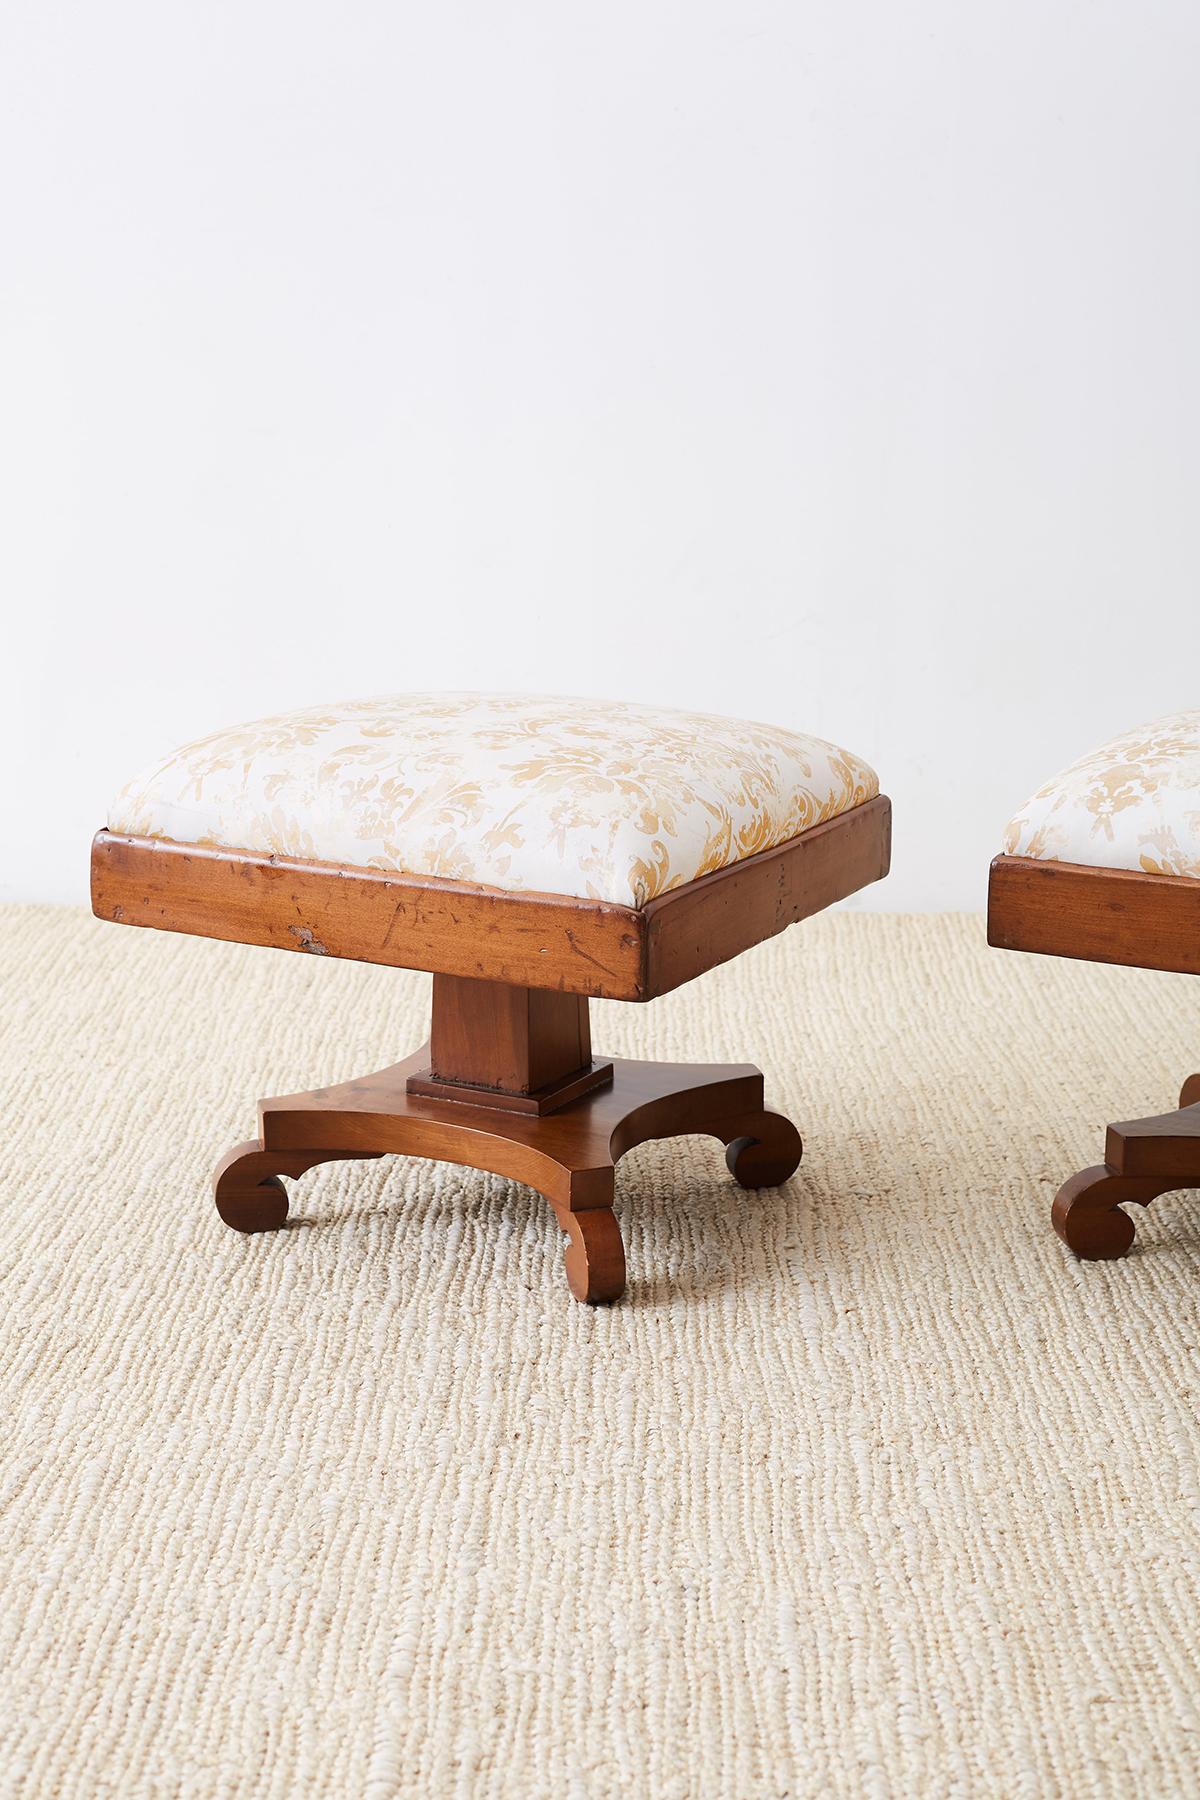 Pair of Biedermeier Carved Footstools with Fortuny Upholstery (Handgefertigt)